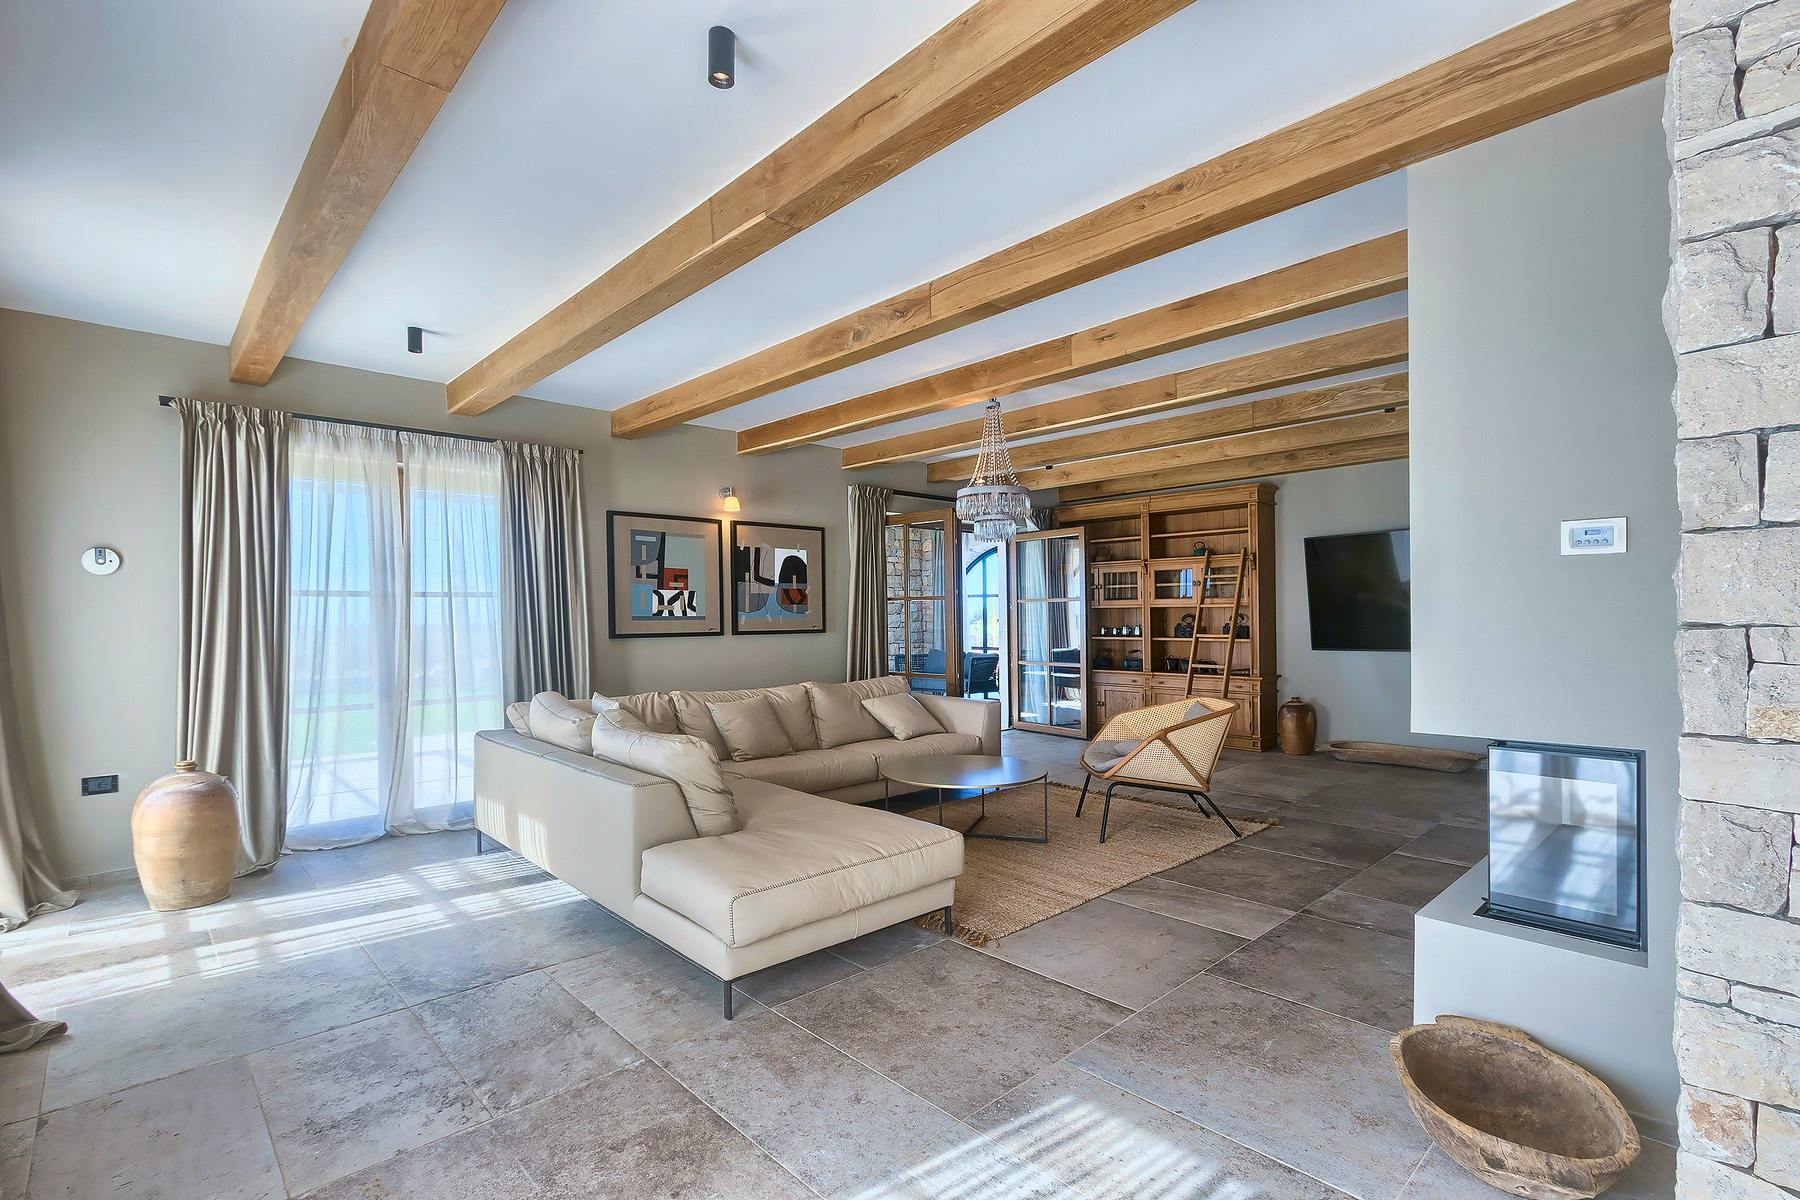 Cozy living room area enhanced by wooden beams